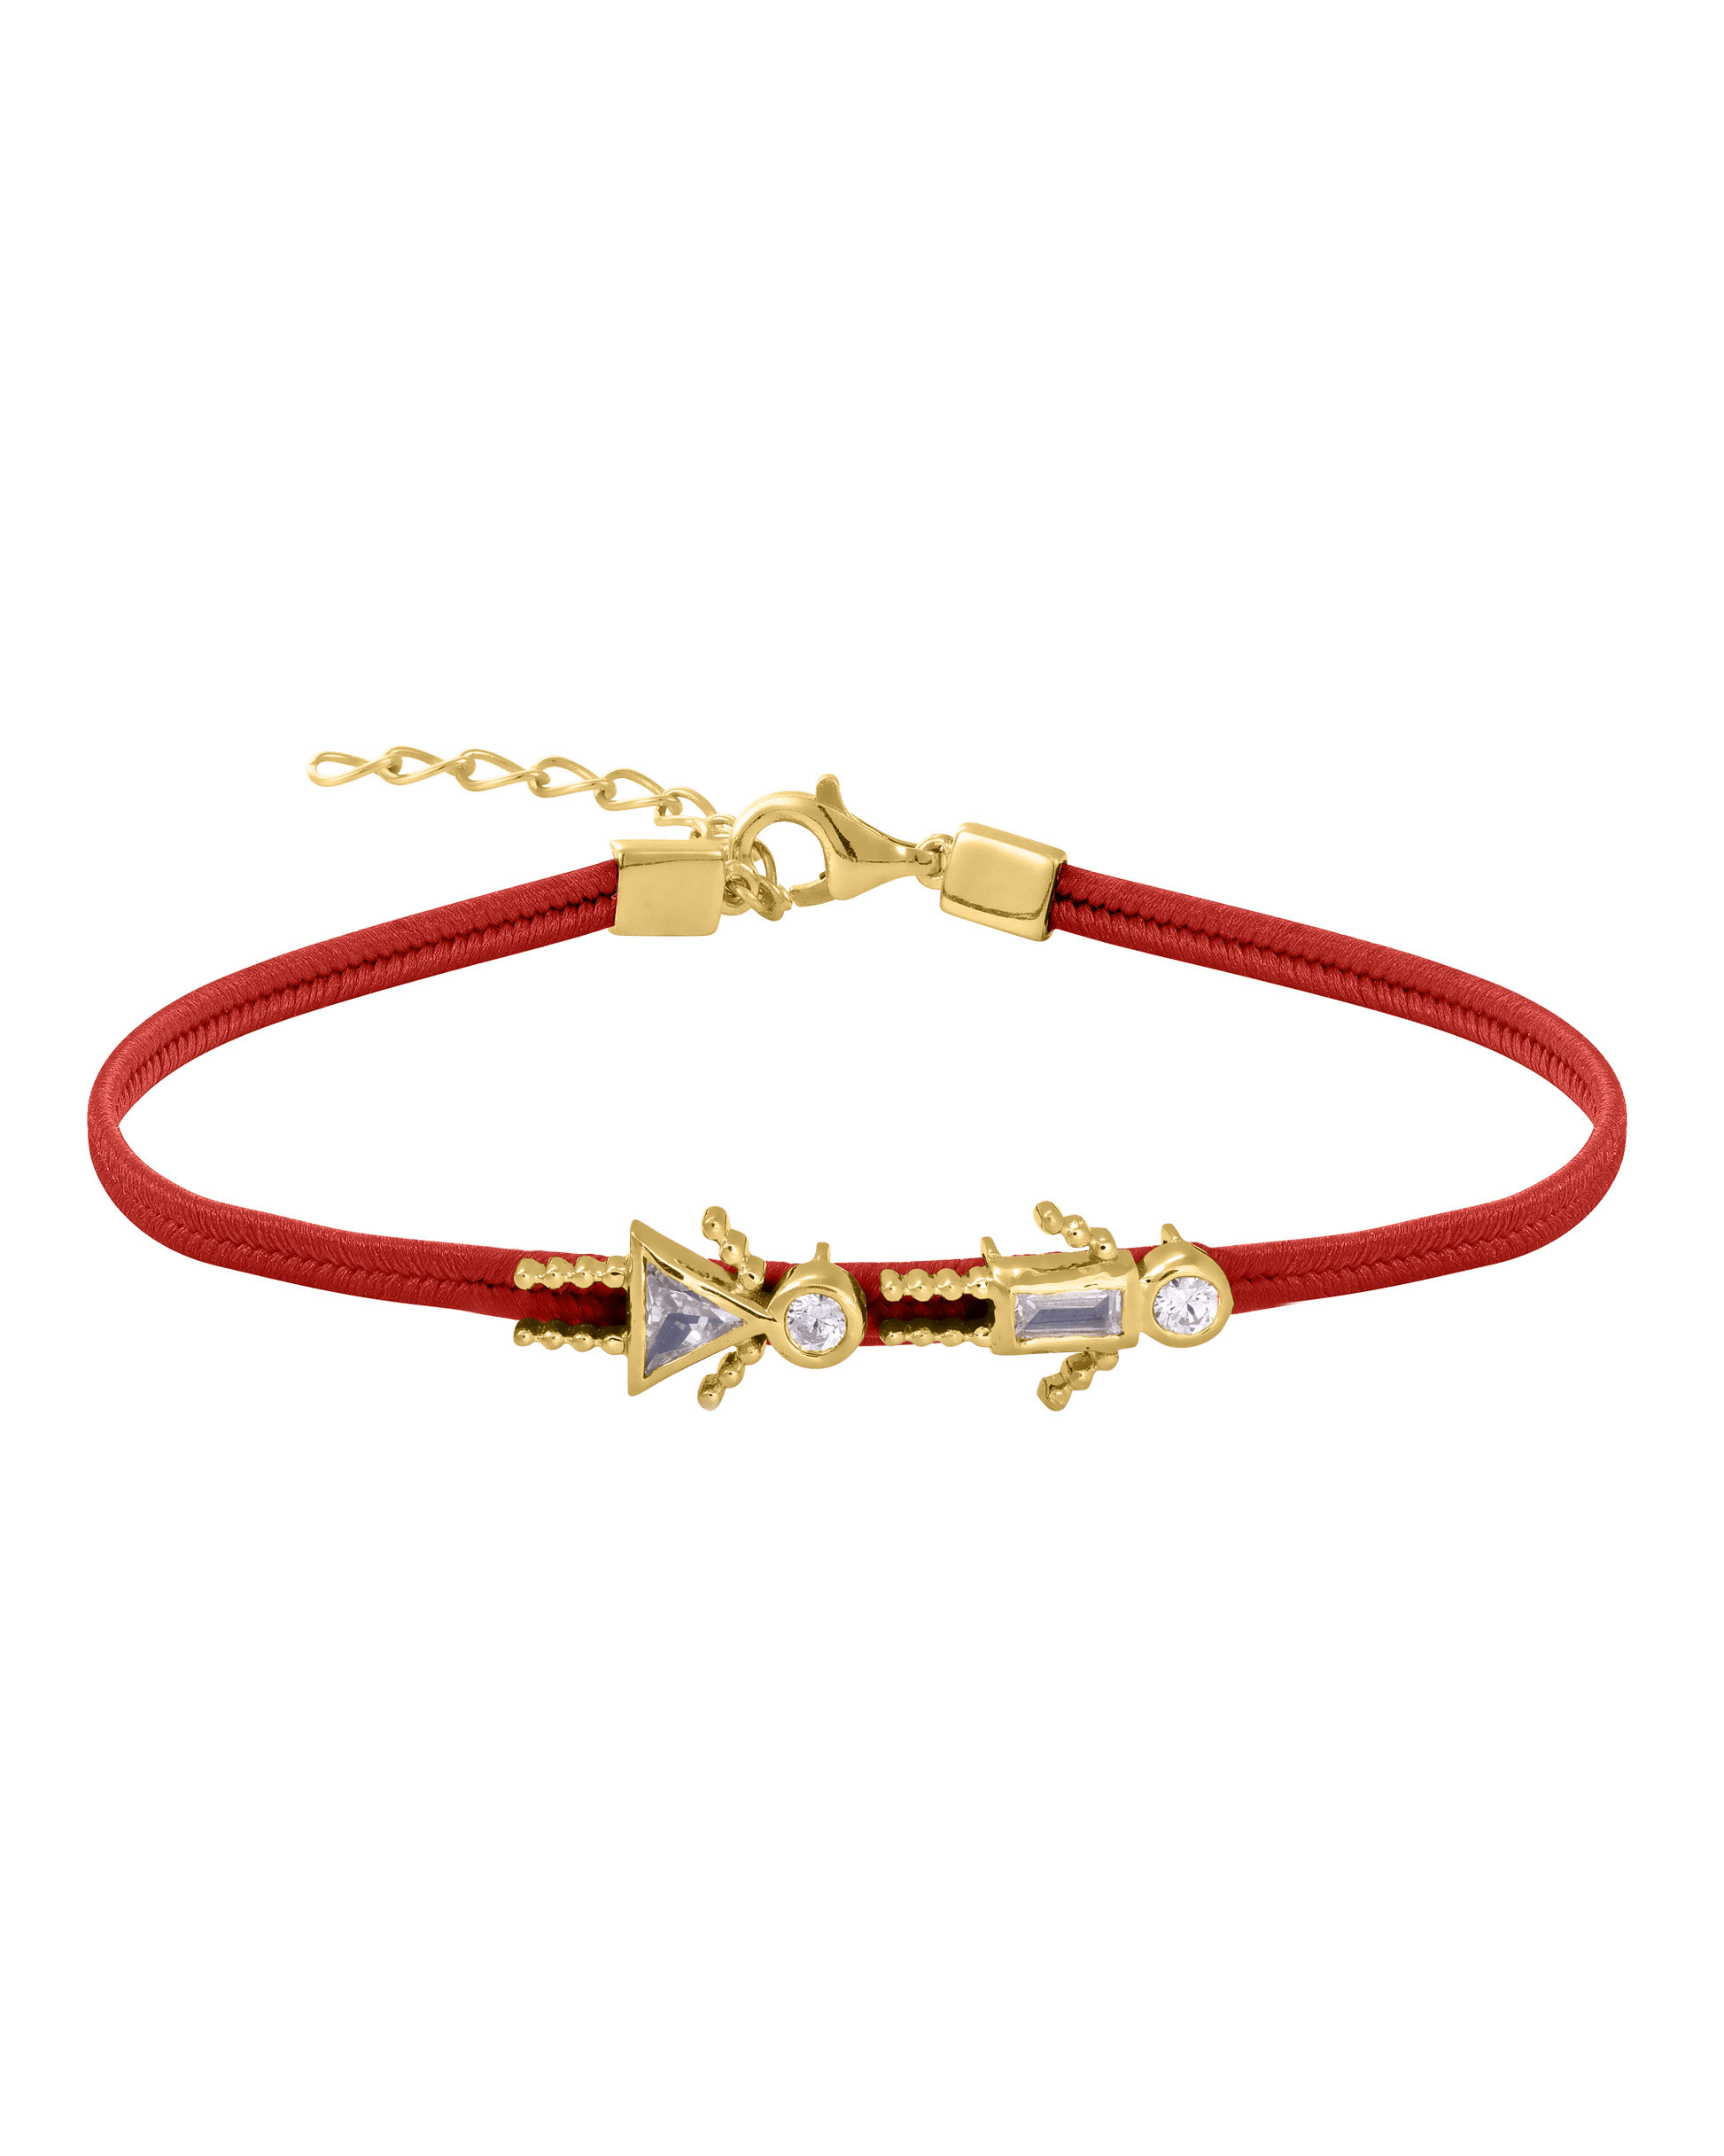 Mini Me Cord Bracelet - 18K Gold Vermeil Bracelets magal-dev Red 2 6"+1.5" extender